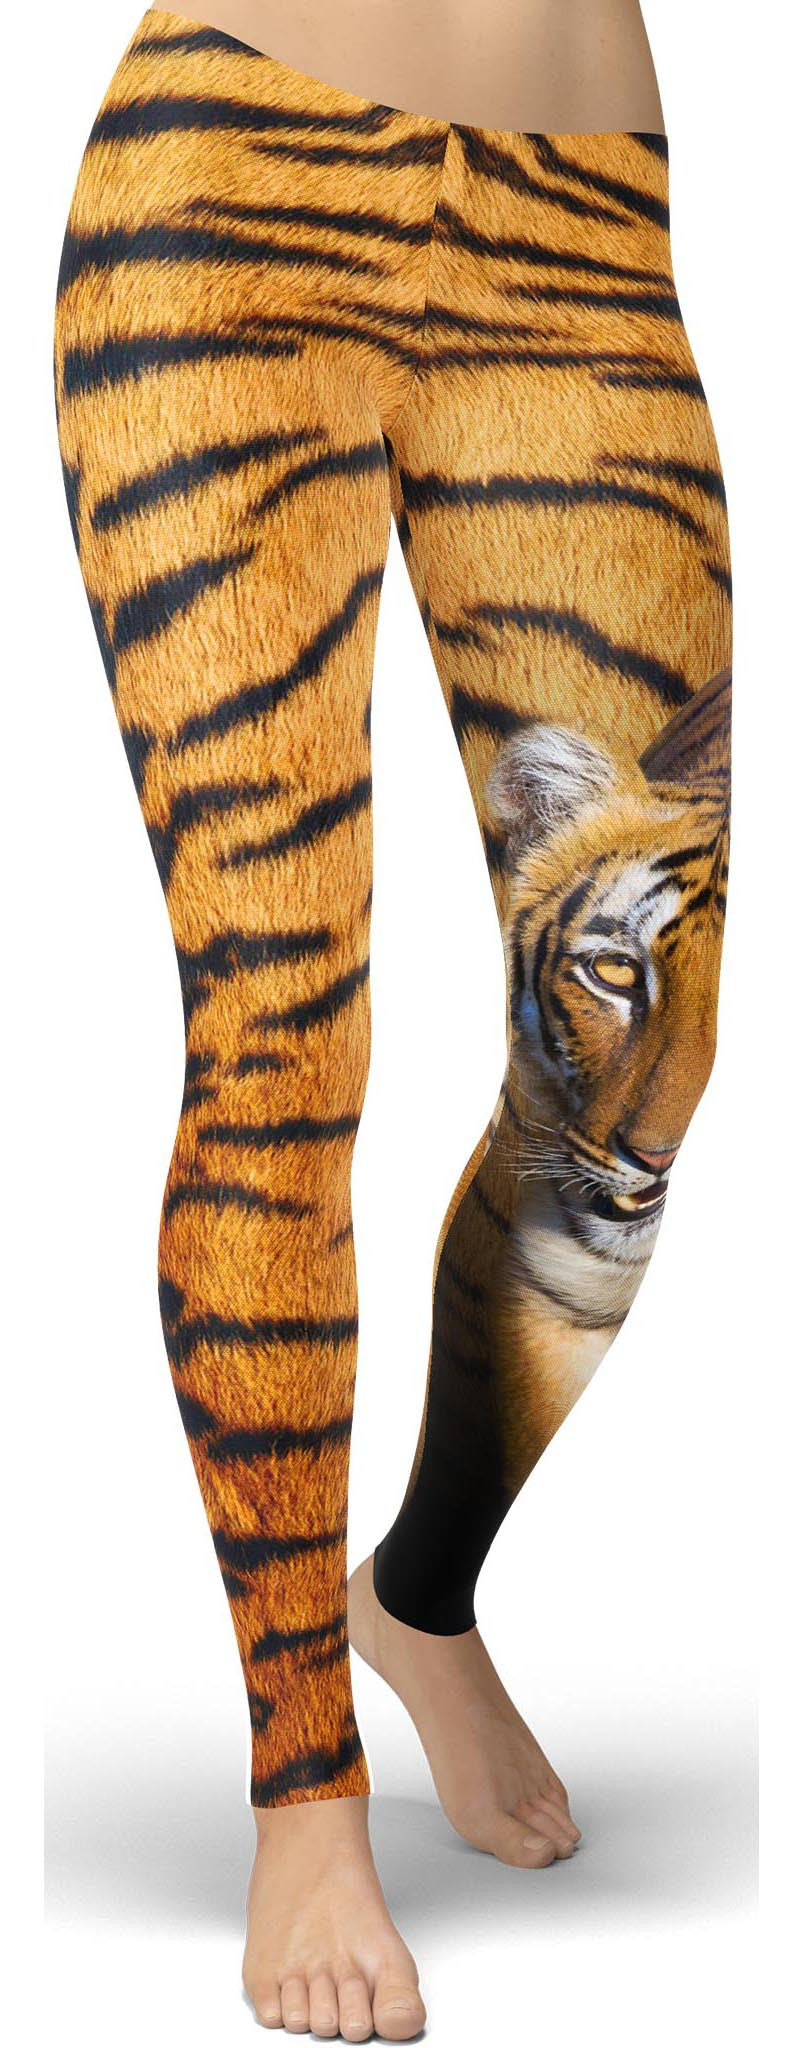 Buy Womens Tiger Print Leggings, Animal Print Leggings, Tiger Skin Leggings,  Printed Leggings, Workout Leggings, Yoga Pants, High Waist Leggings Online  in India 